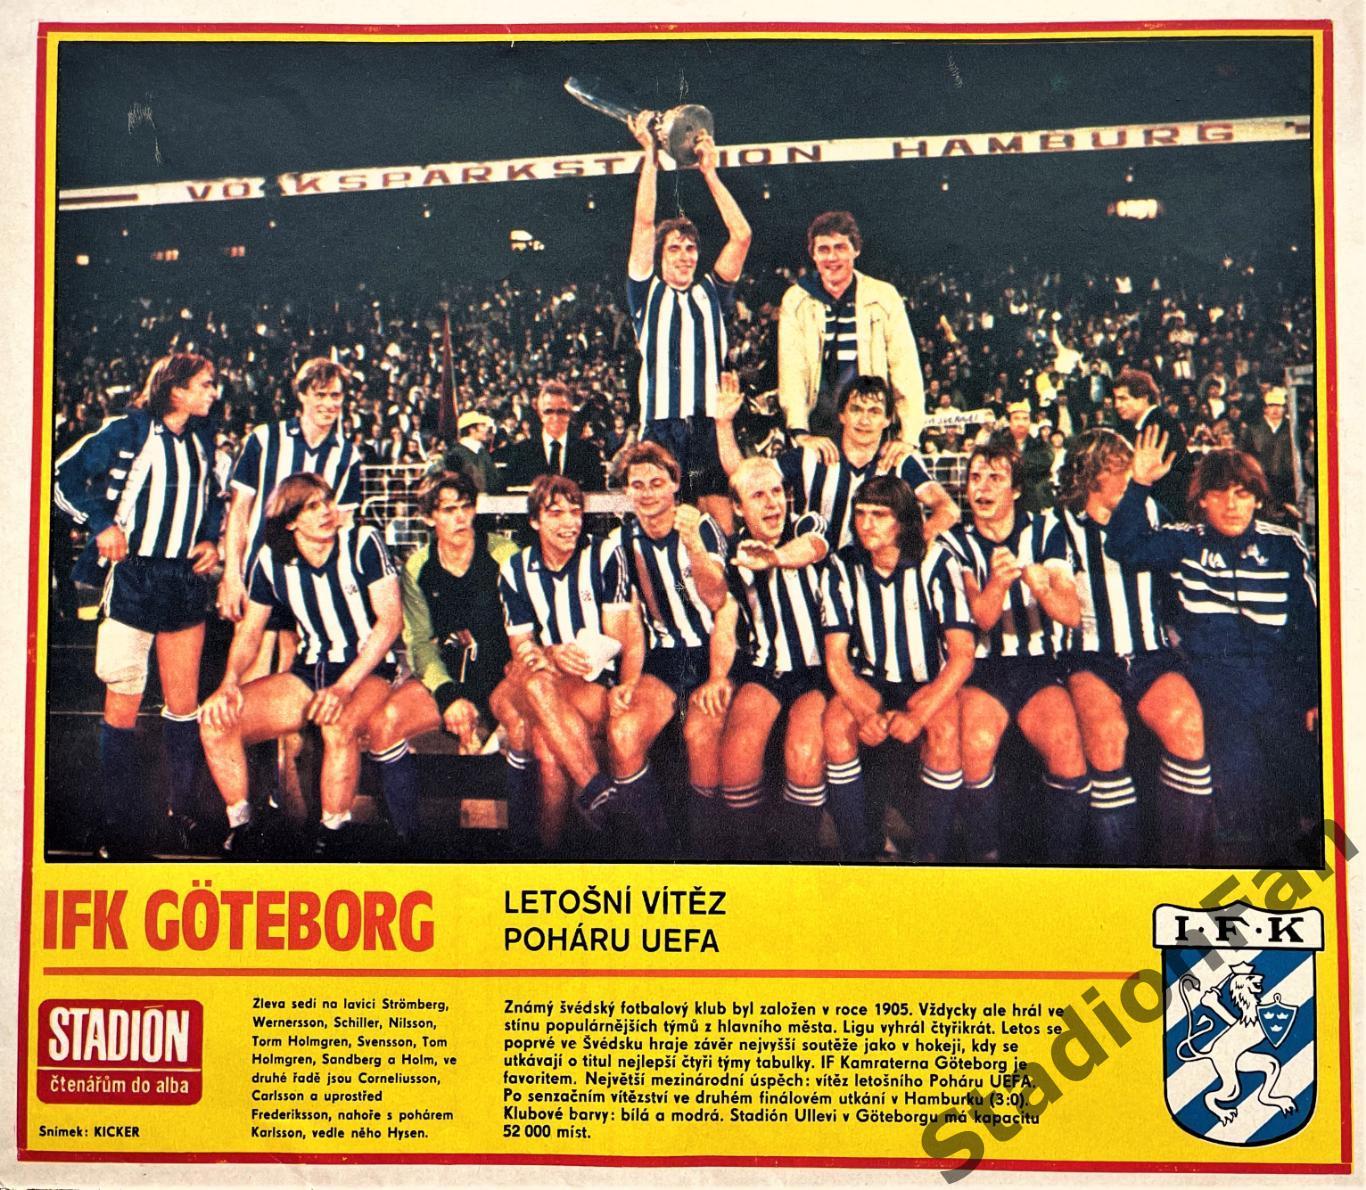 Постер из журнала Стадион (Stadion) - Geteborg, 1982.